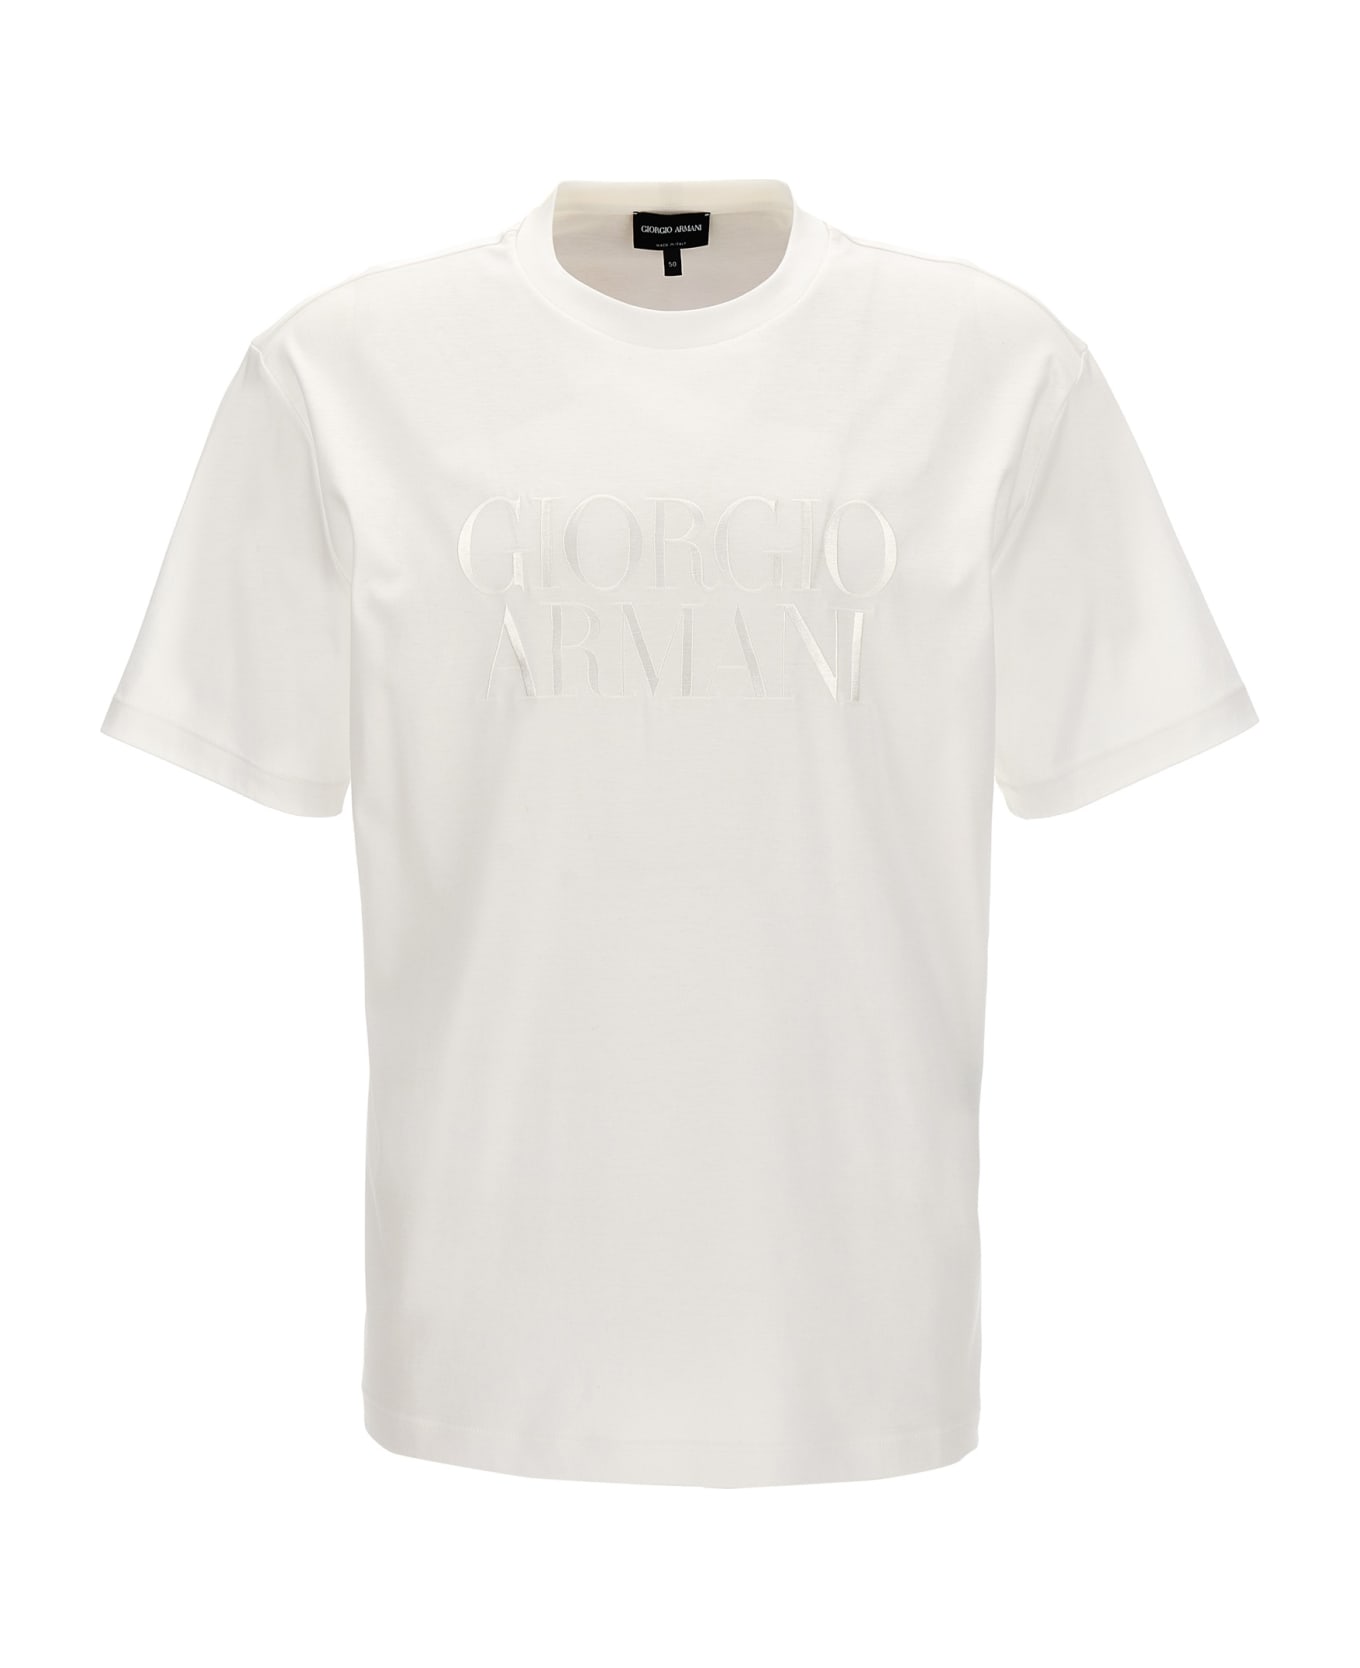 Giorgio Armani Logo T-shirt - White